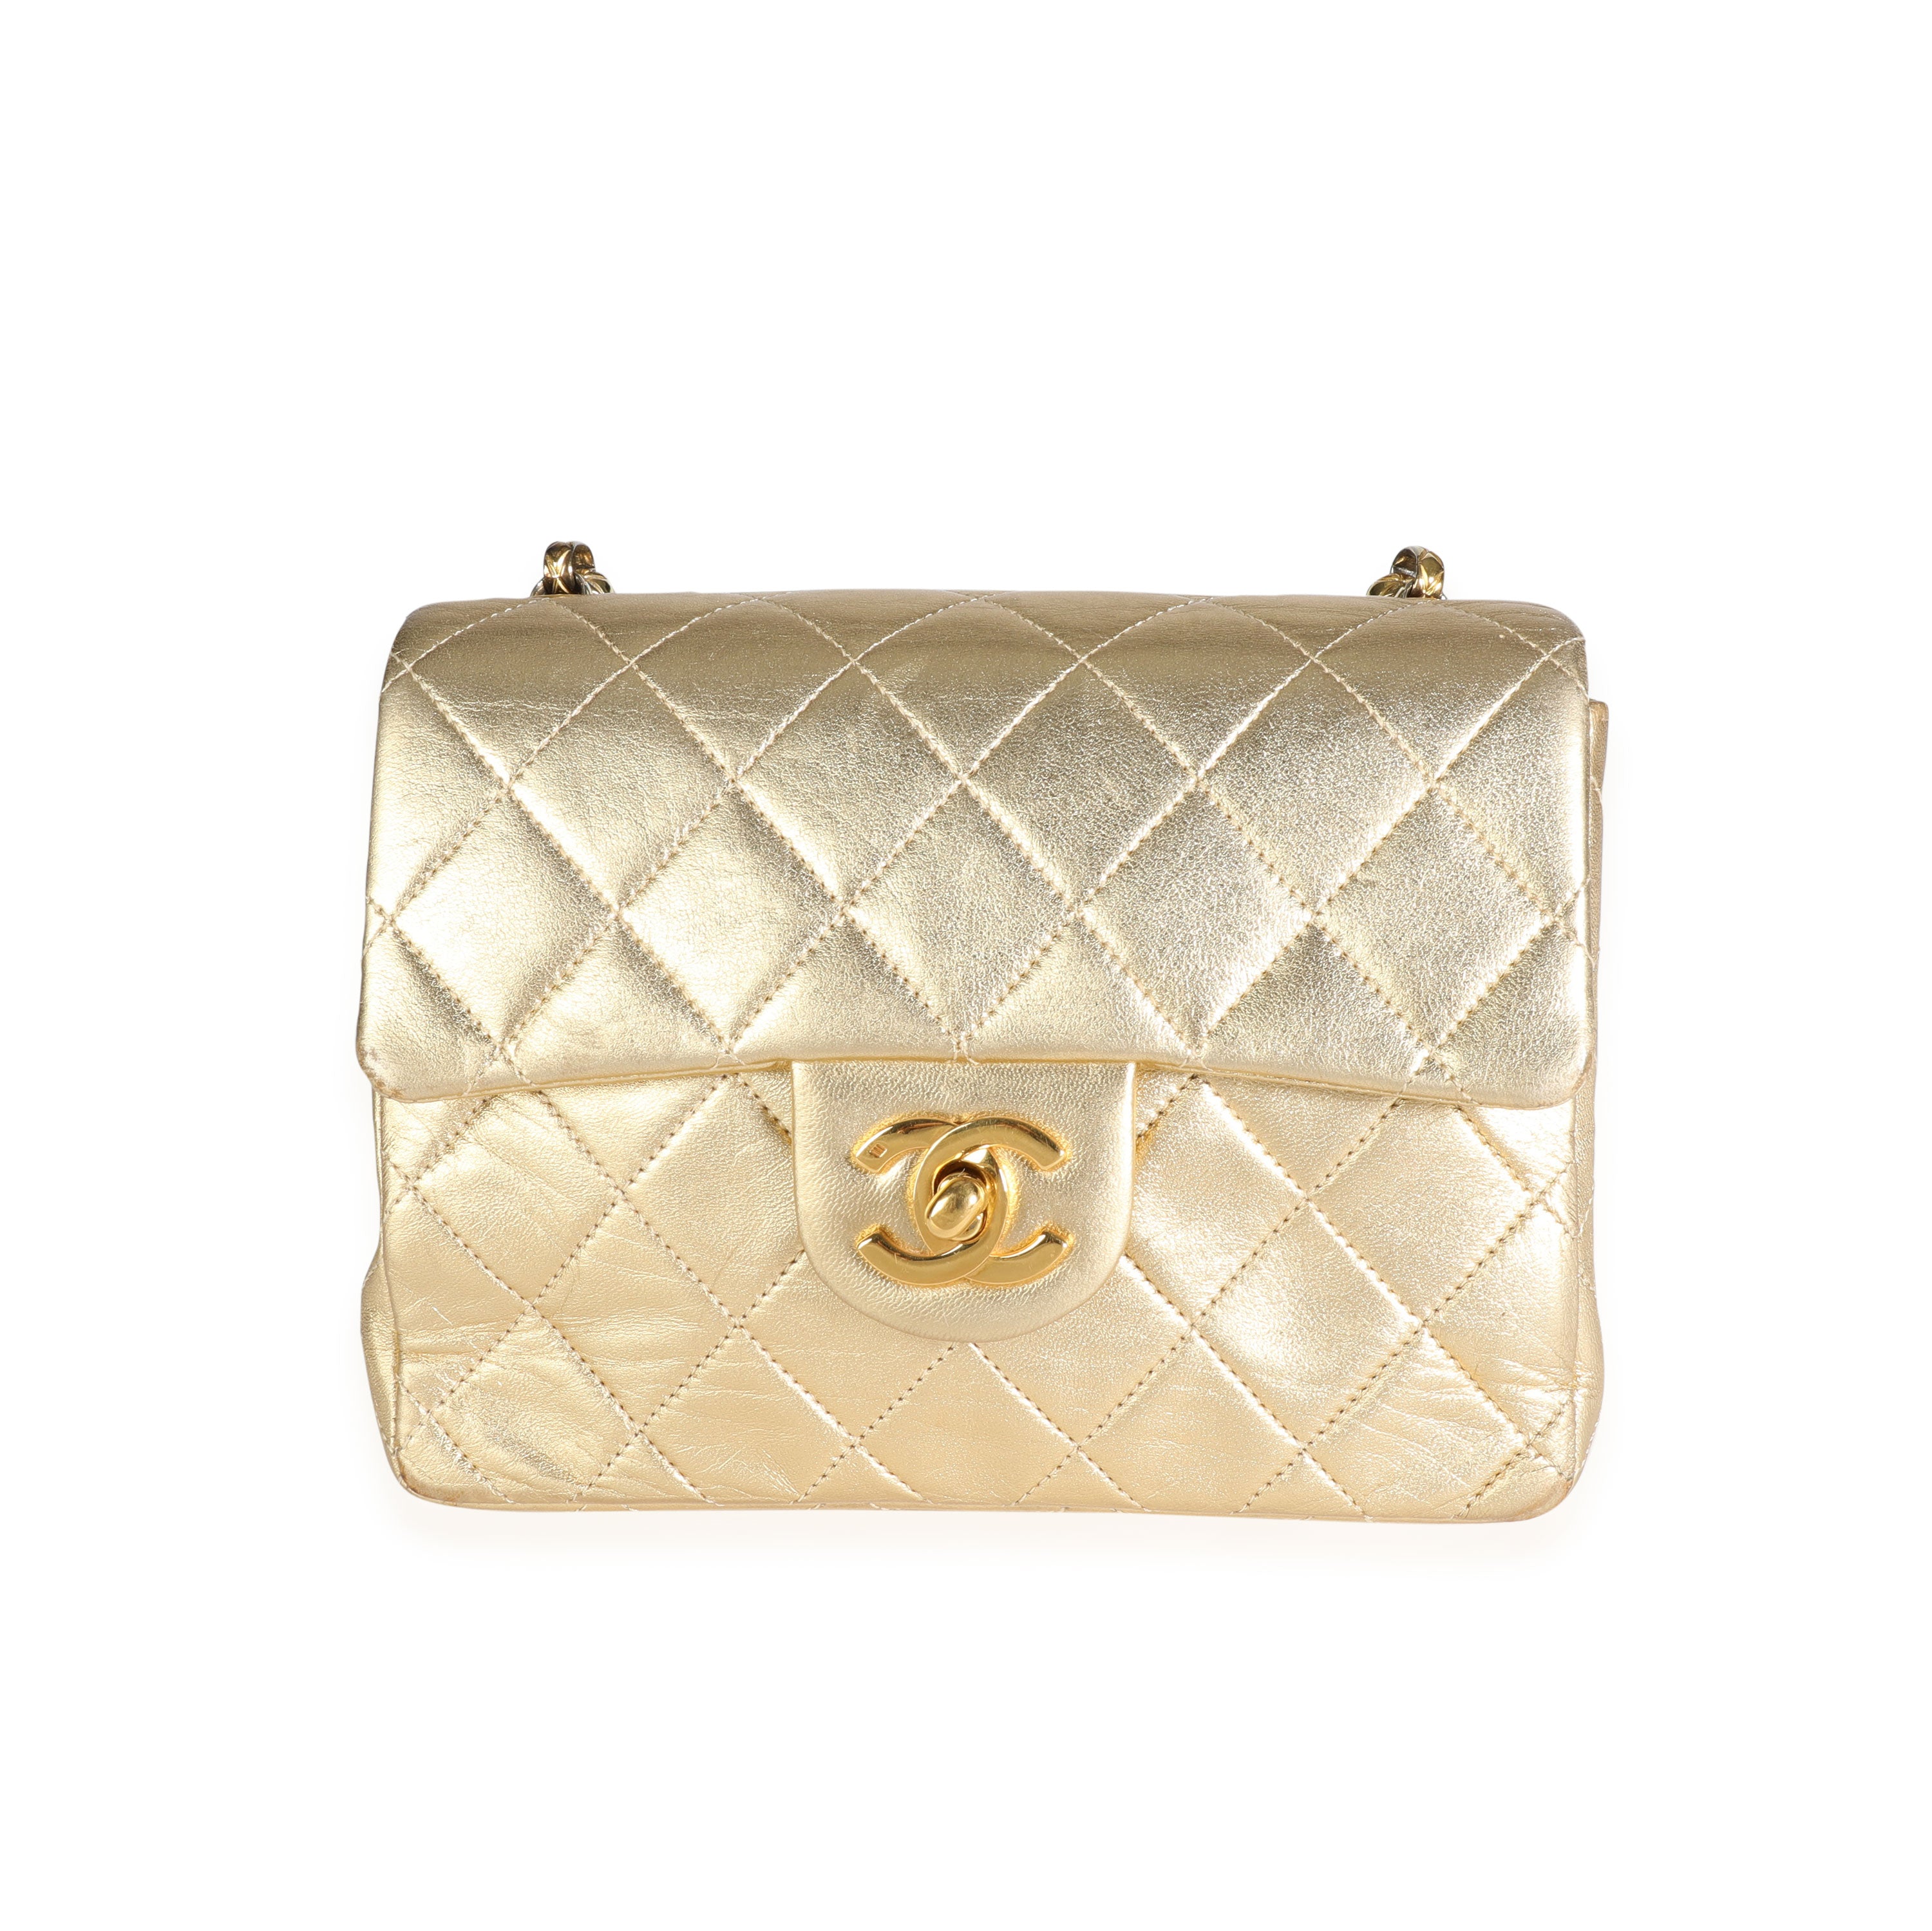 Chanel - Vintage Square Earrings - Gold – Shop It